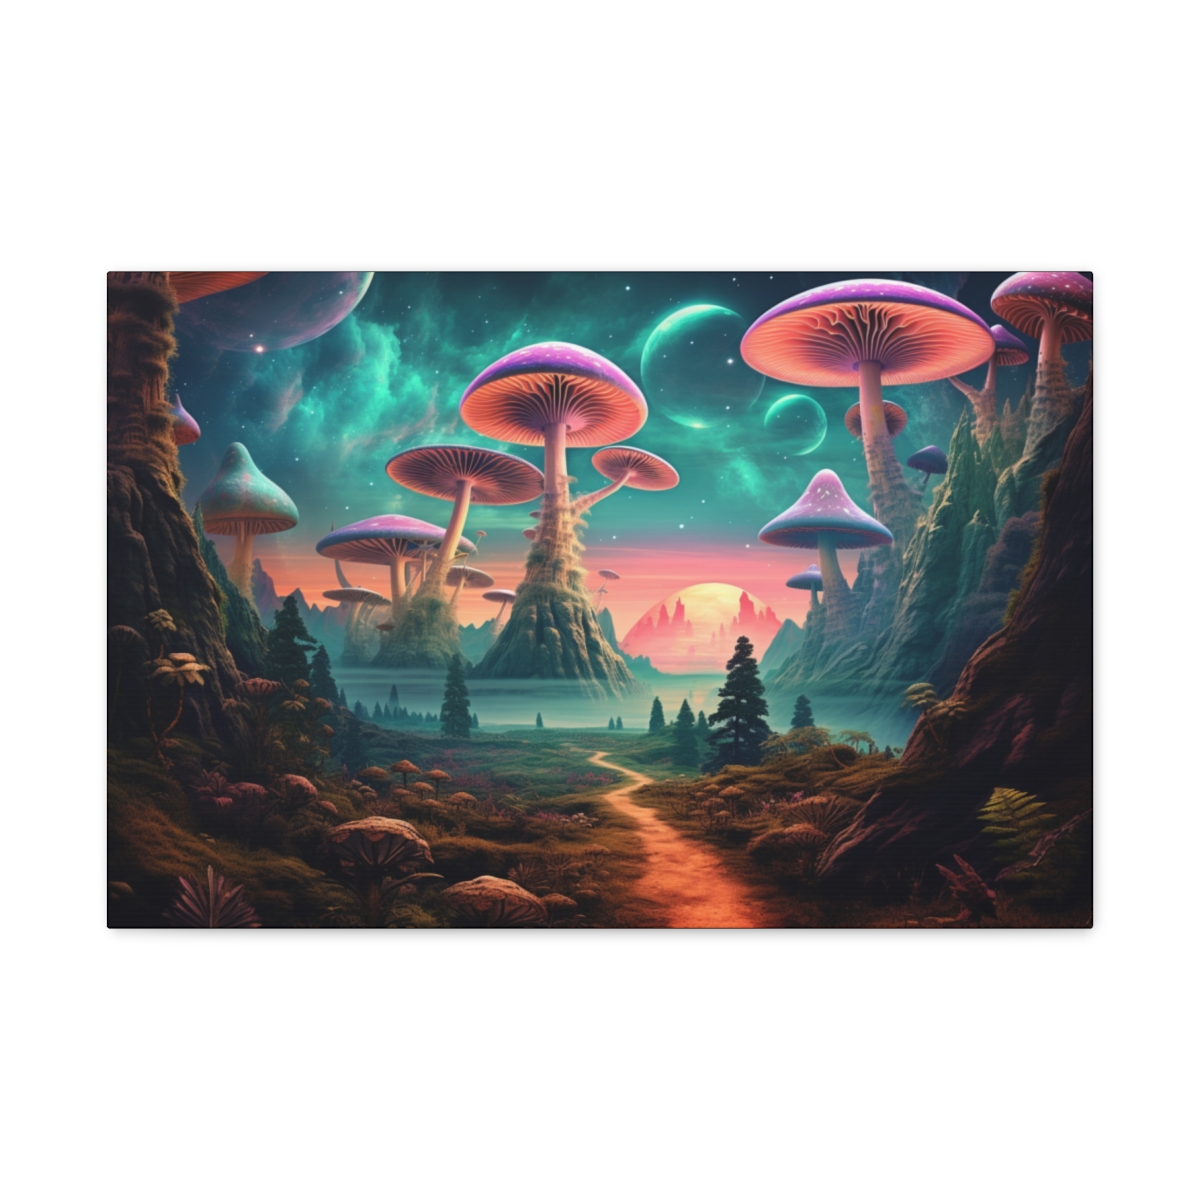 Trippy Mushroom Art: Galactic Mycota